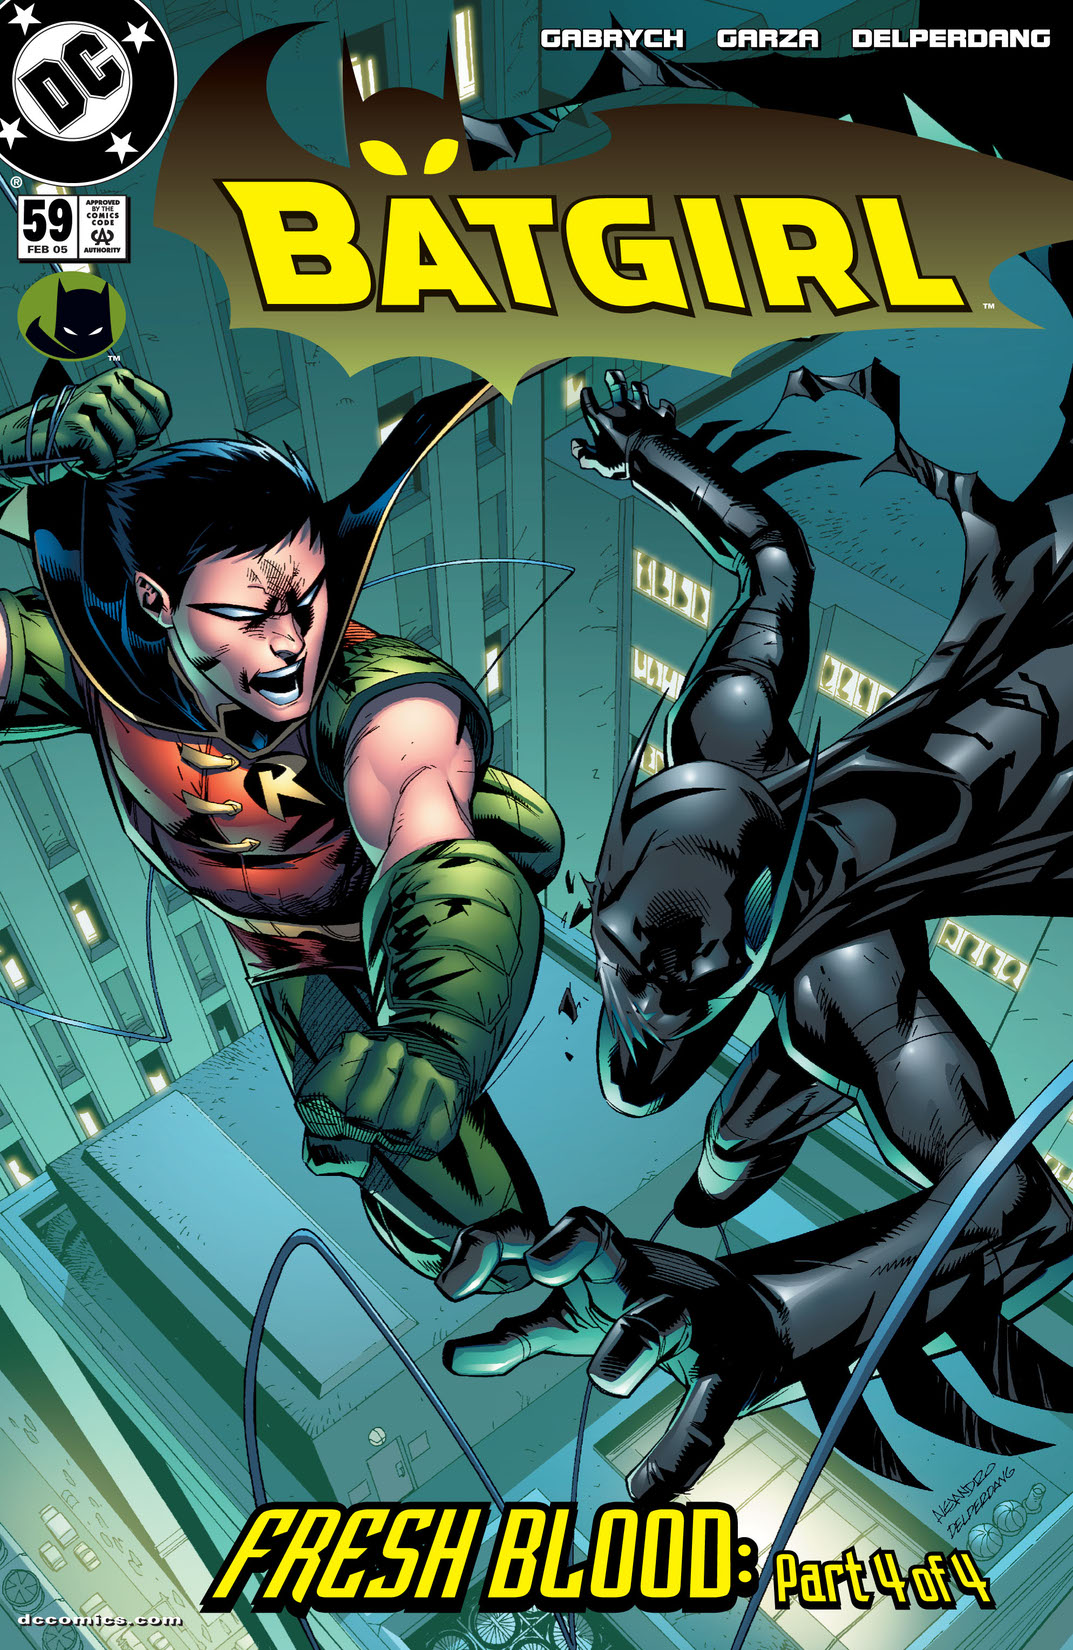 Batgirl (2000-) #59 preview images